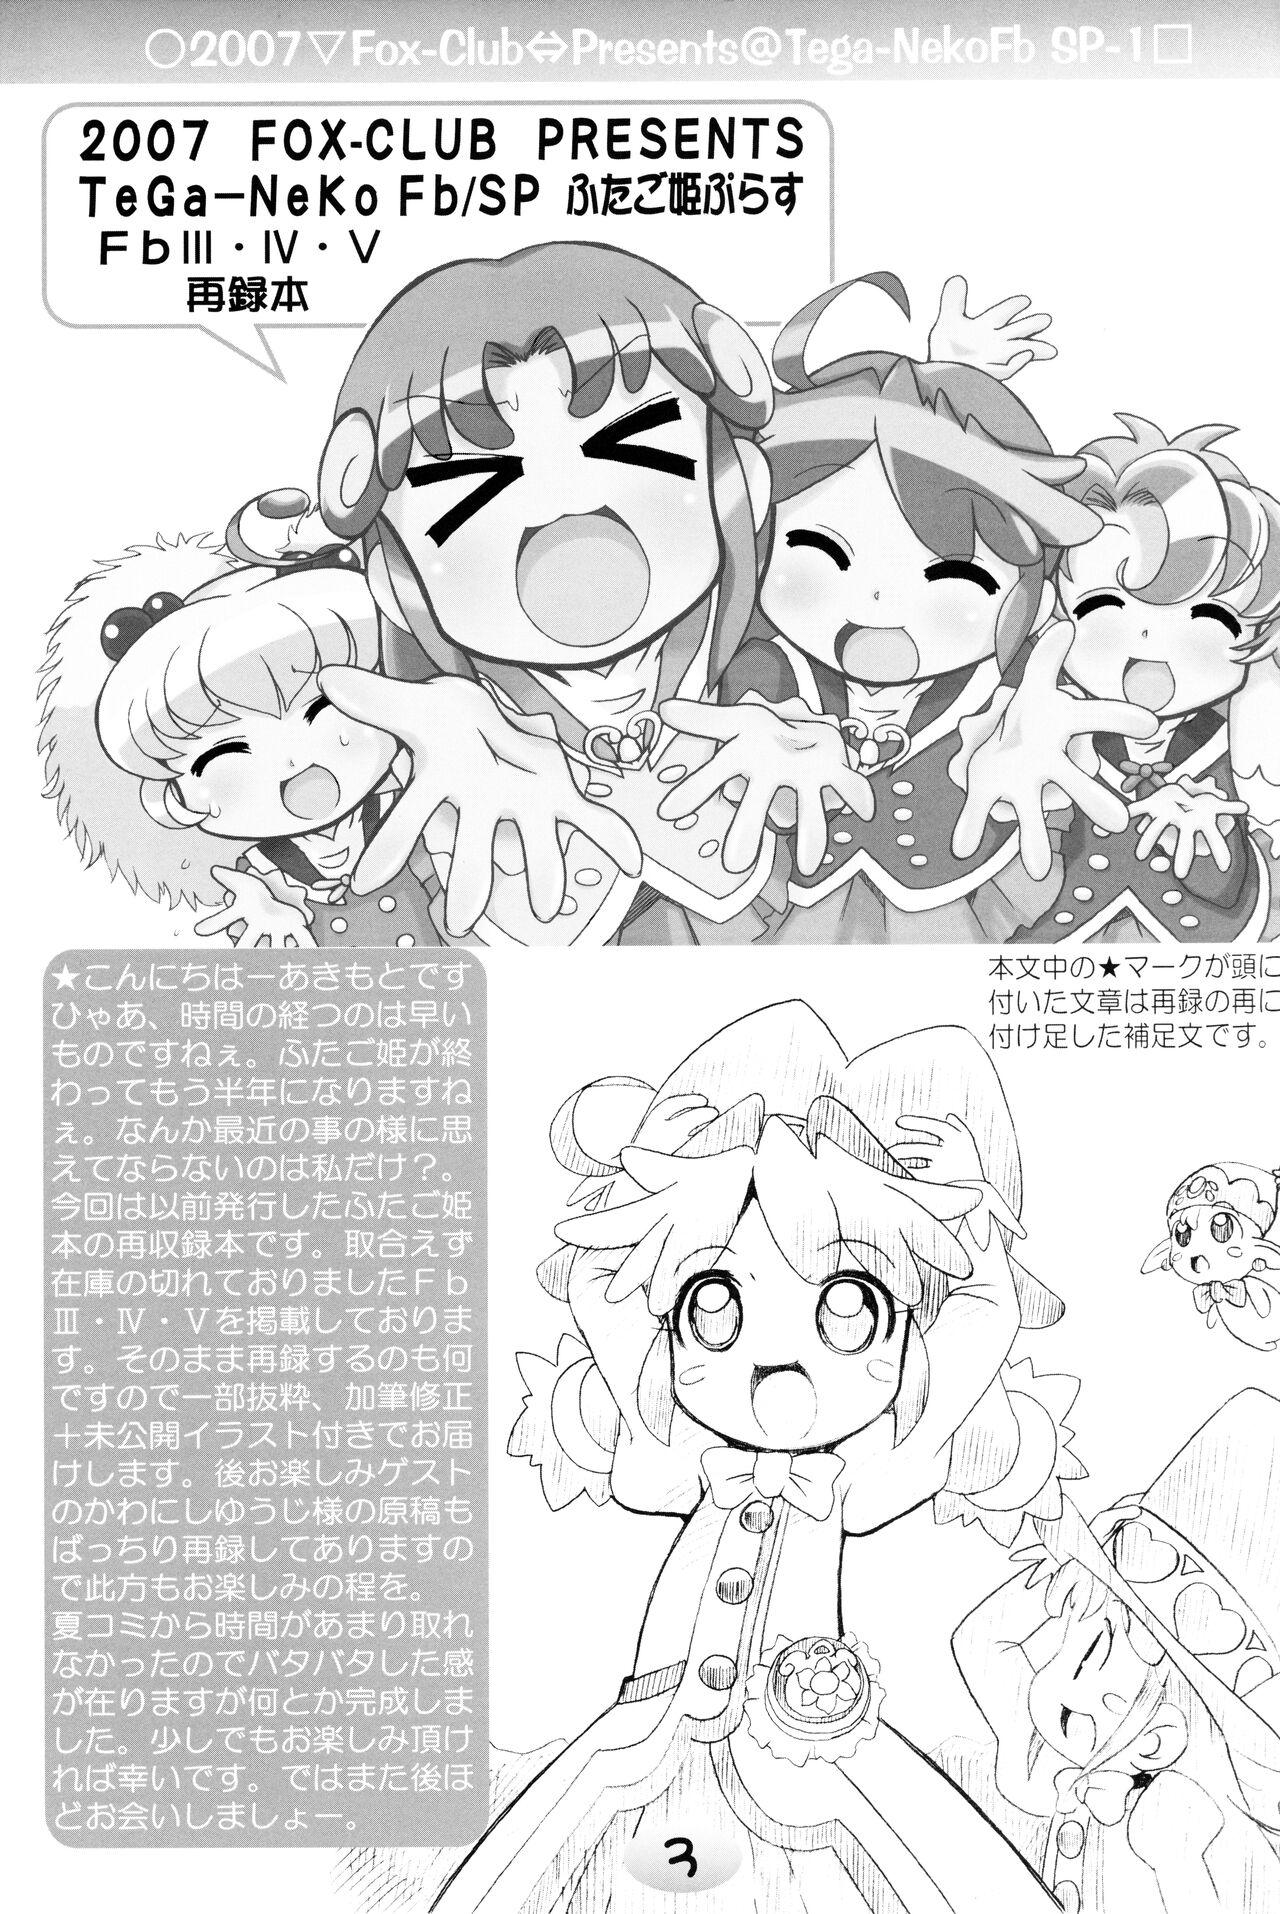 Hooker TeGa-NeKo Fb/SP Futago Hime Plus - Fushigiboshi no futagohime | twin princesses of the wonder planet Jeans - Page 2